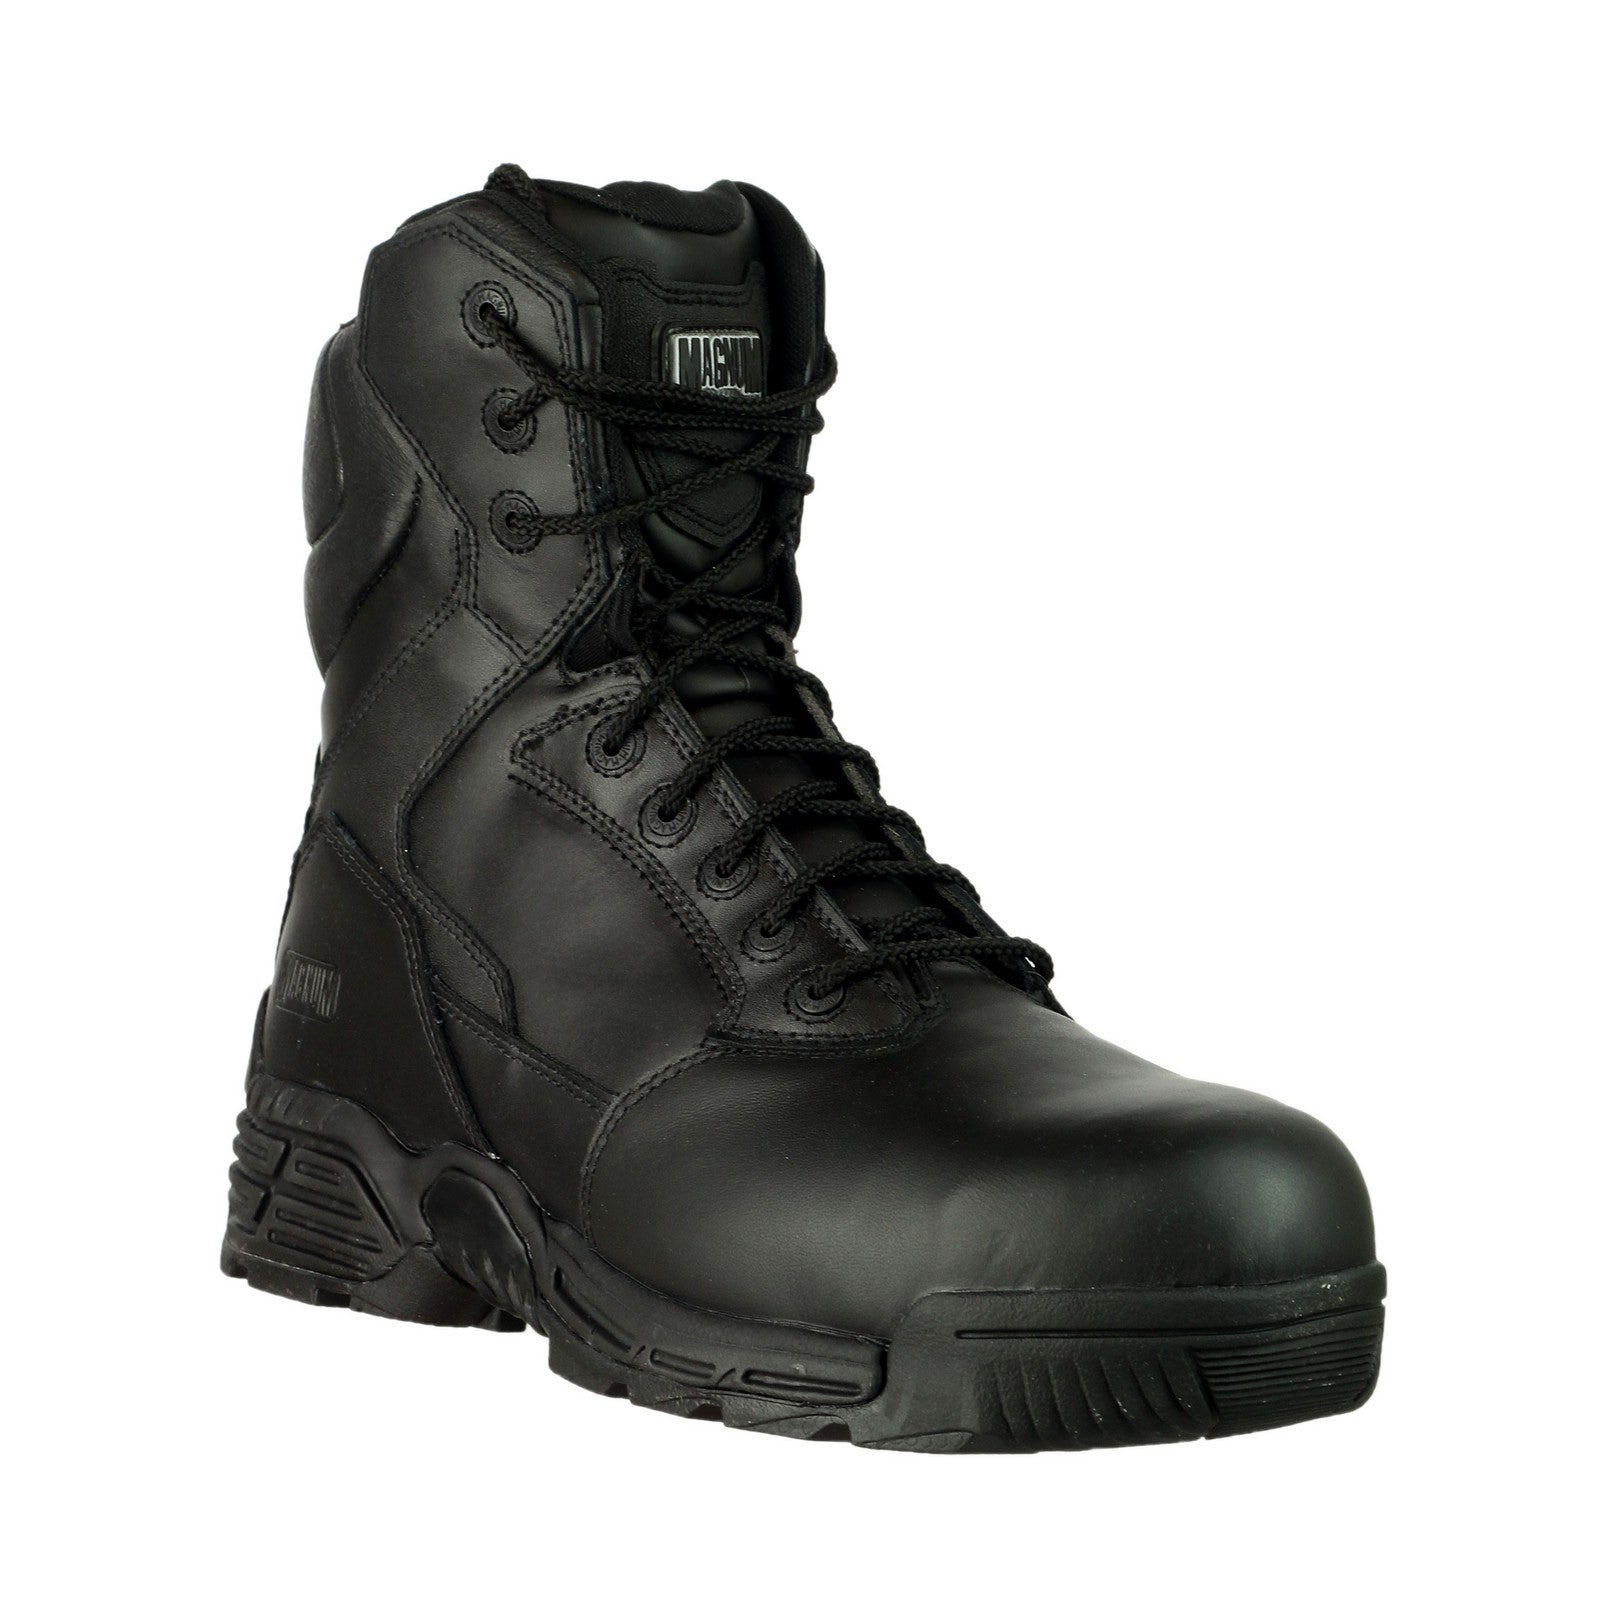 Stealth Force 8.0 Uniform Safety Boots, Magnum